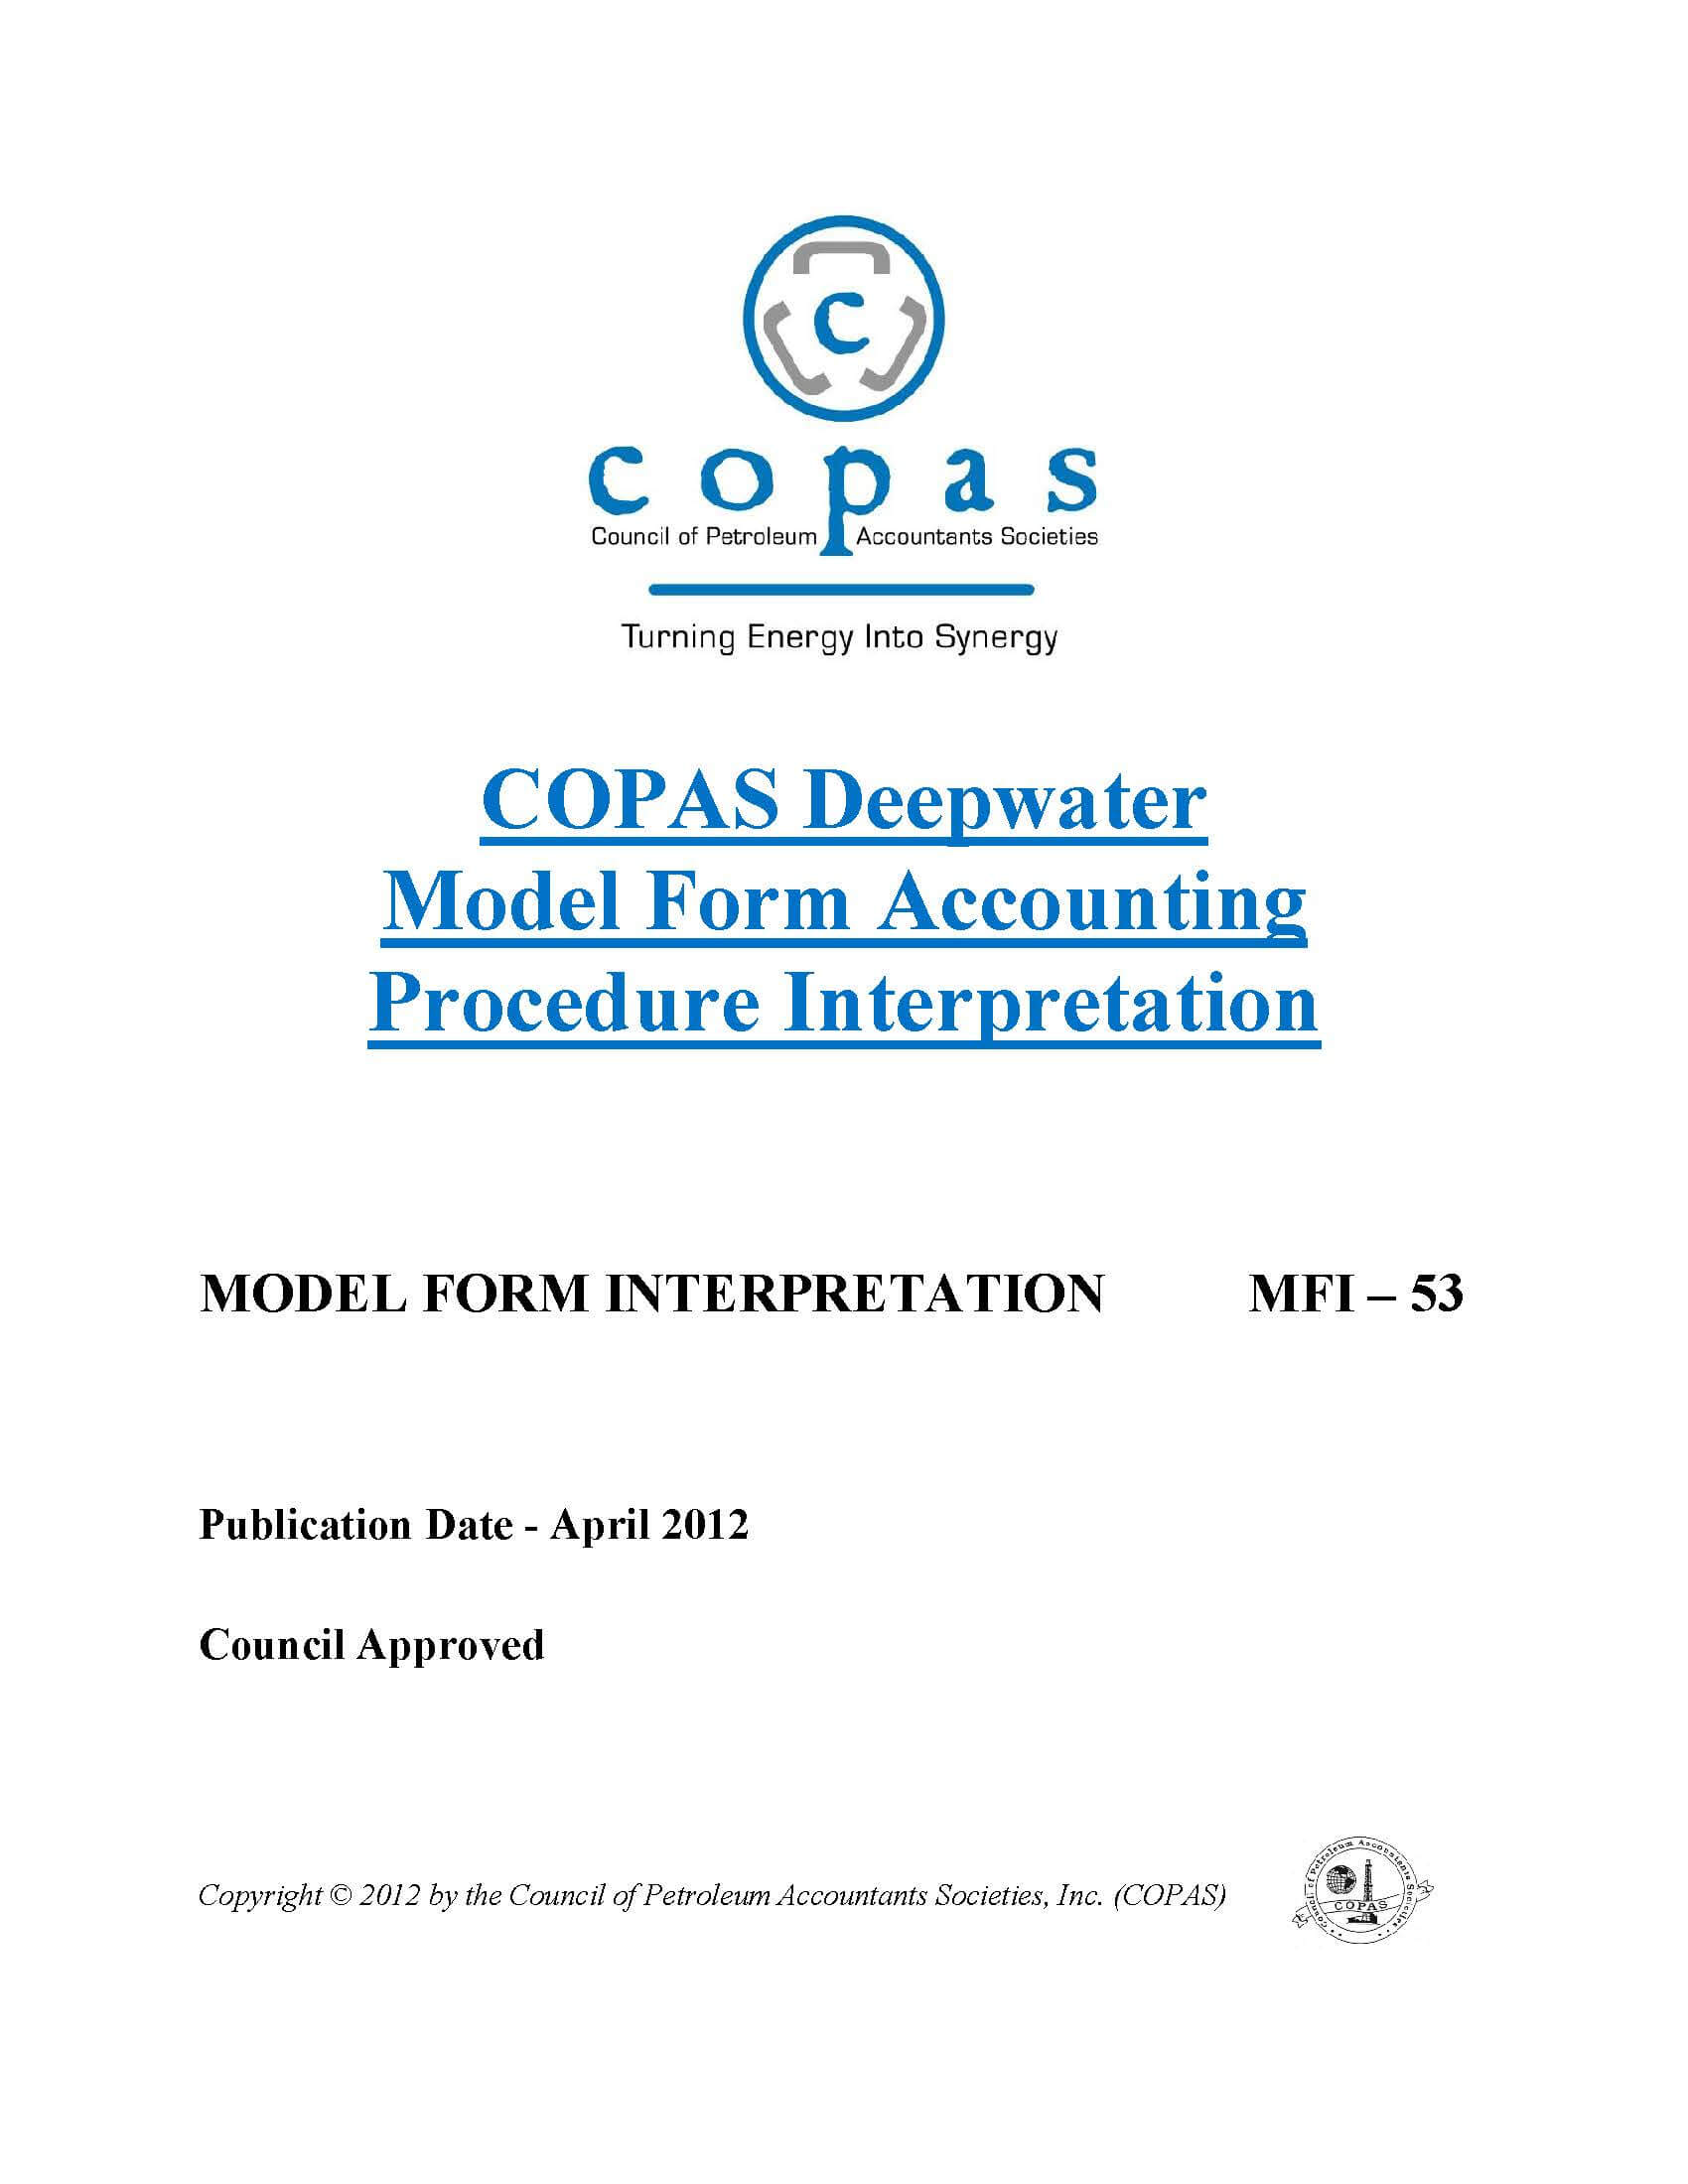 MFI-53 Deepwater Model Form Accounting Procedure Interpretation - products MFI 53 Deepwater Model Form Accounting Procedure Interpretation - Council of Petroleum Accountants Societies